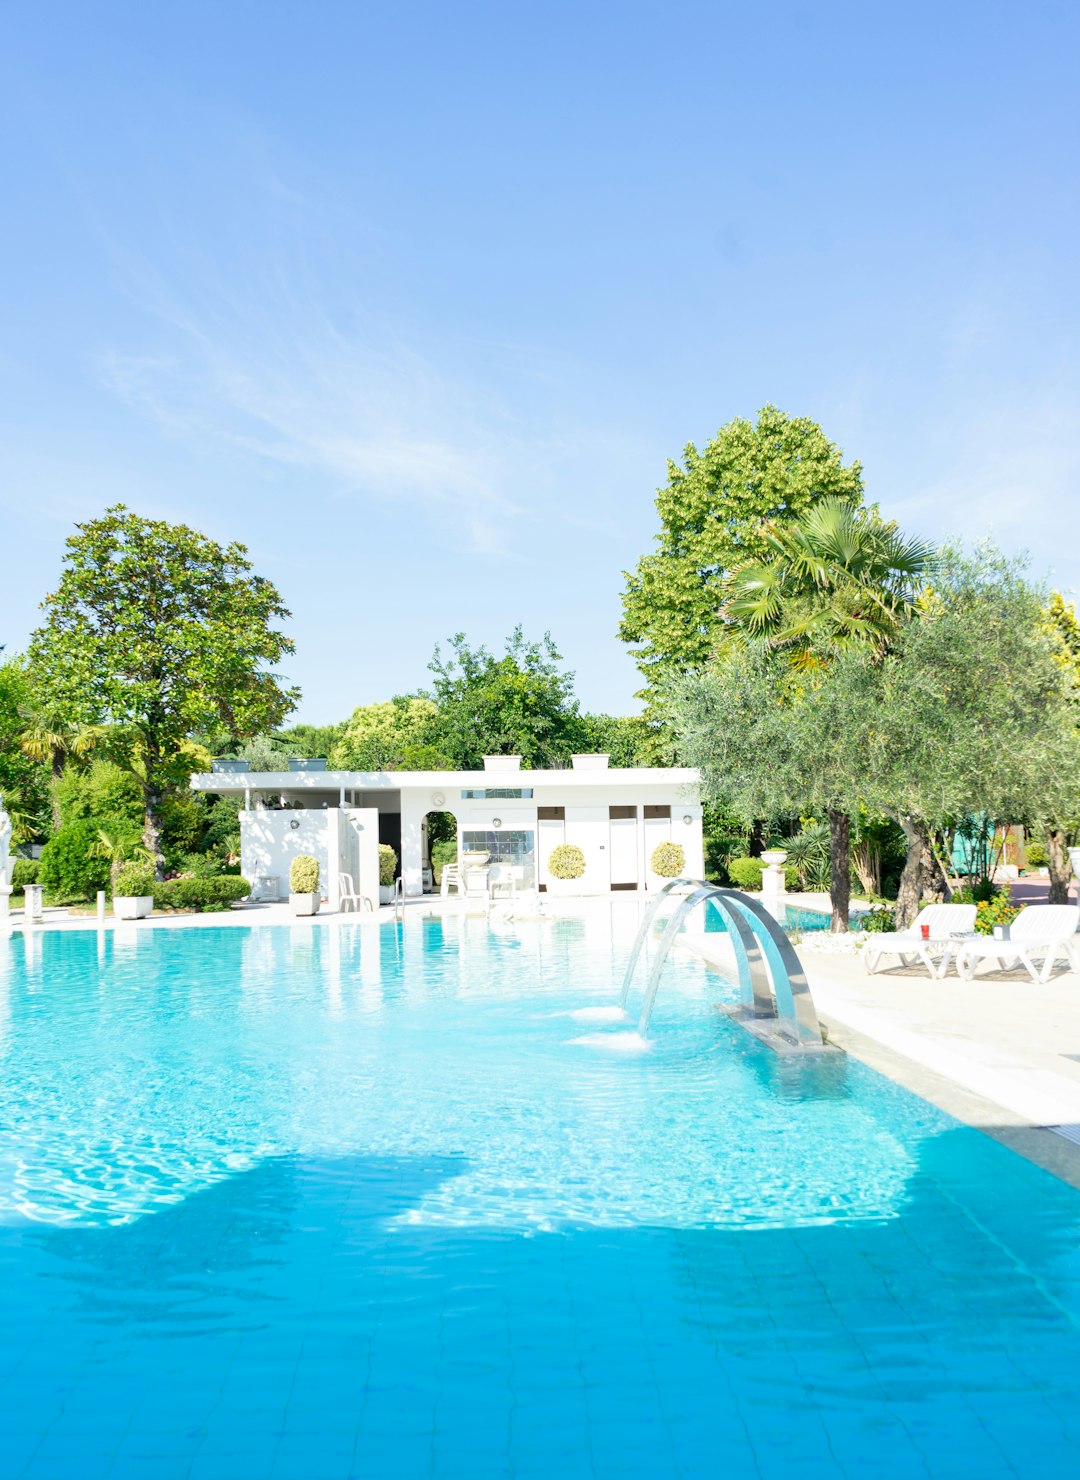 Swimming pool photo spot Montegrotto Terme Italy